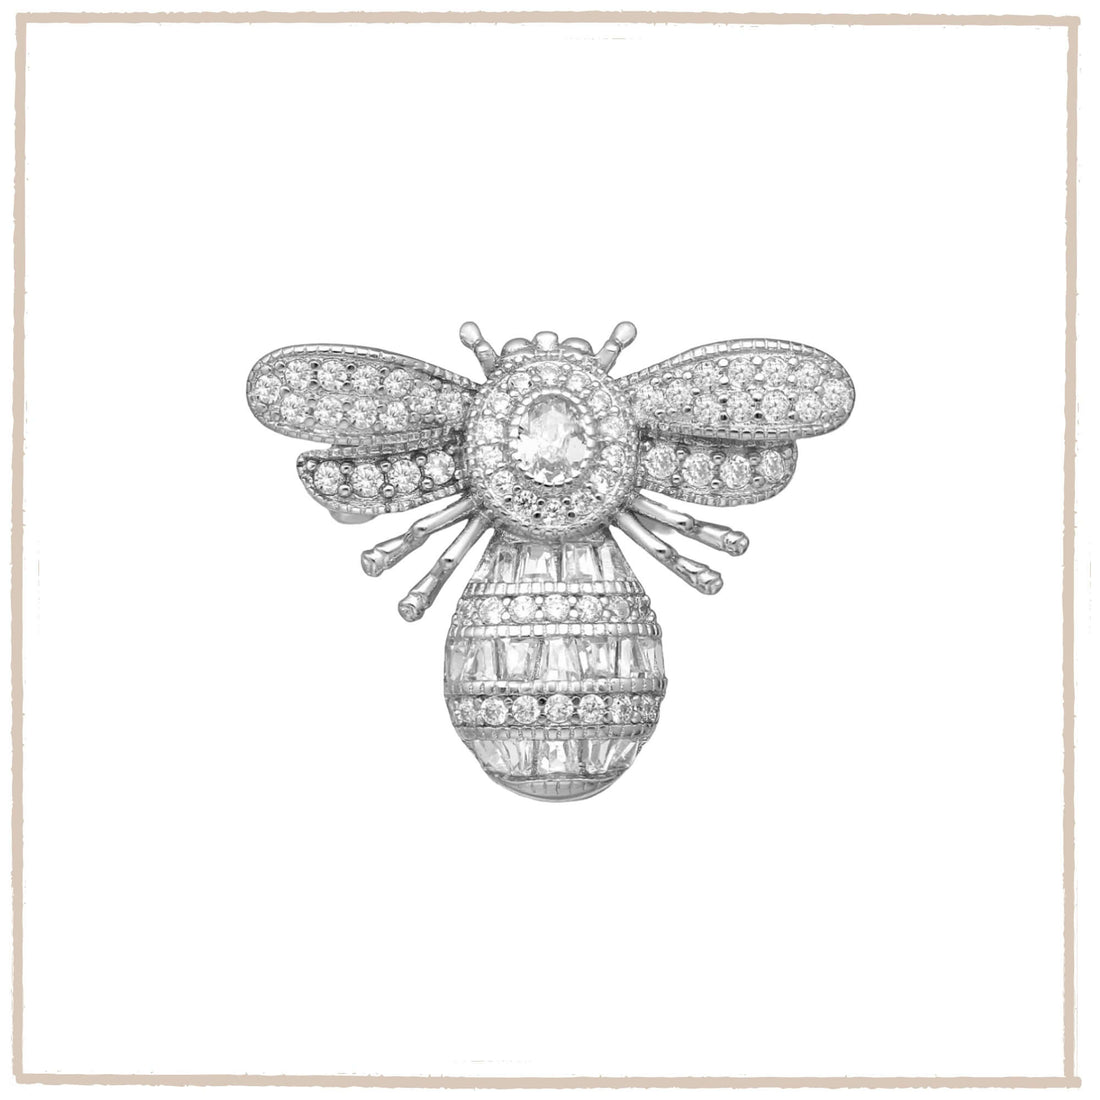 Hidden Symbolism - The Bee in Jewellery, Jewellery blog post By Twelve Silver Trees 